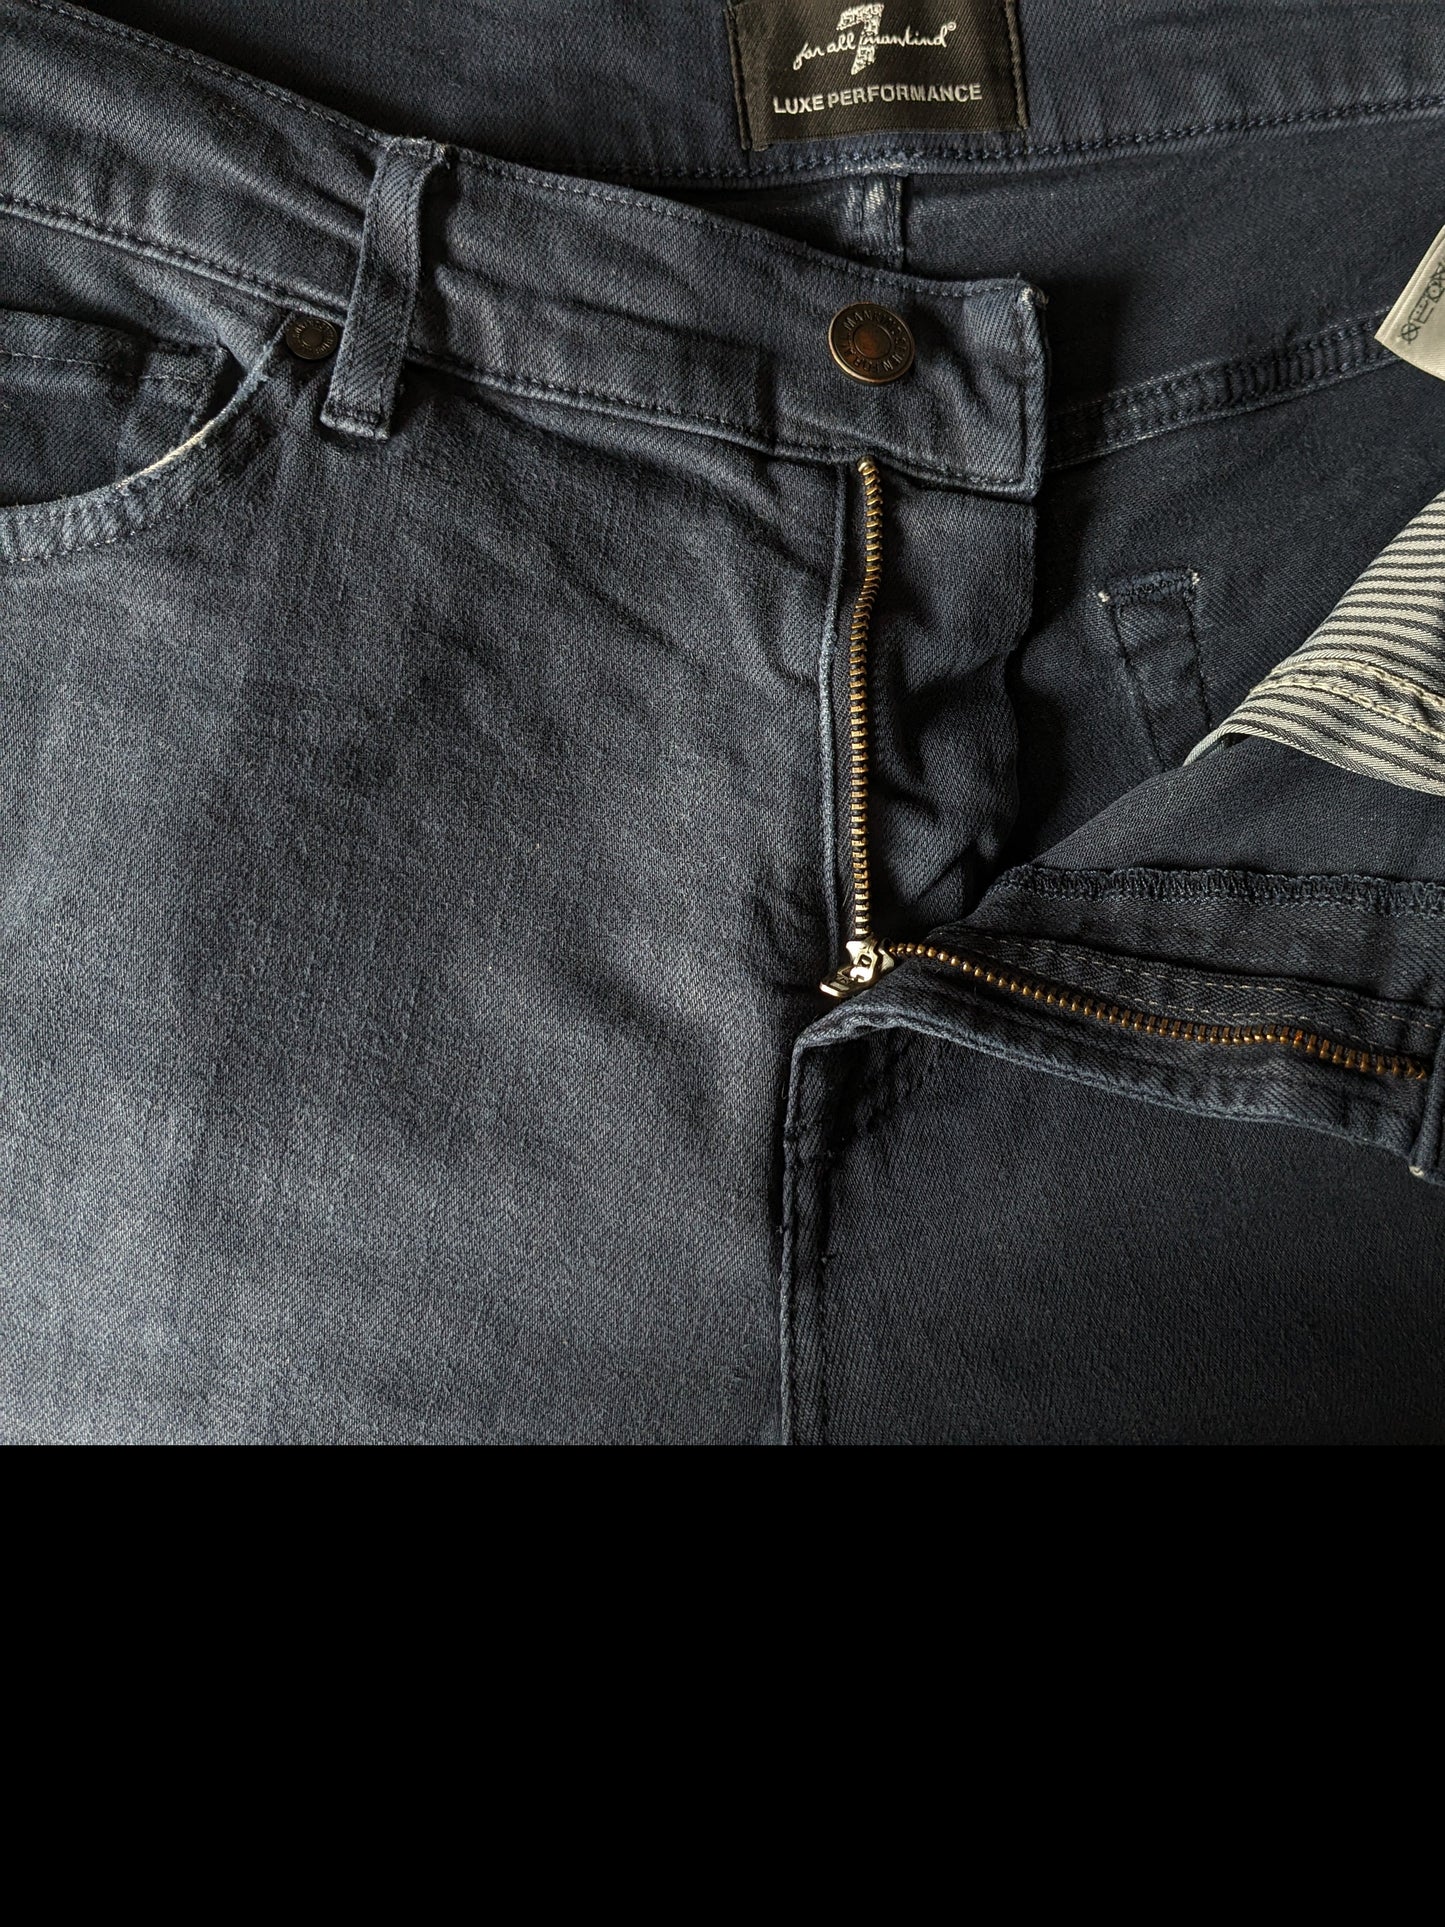 7 for all mankind jeans. Donker Blauw gekleurd. Maat W33 - L34. stretch.